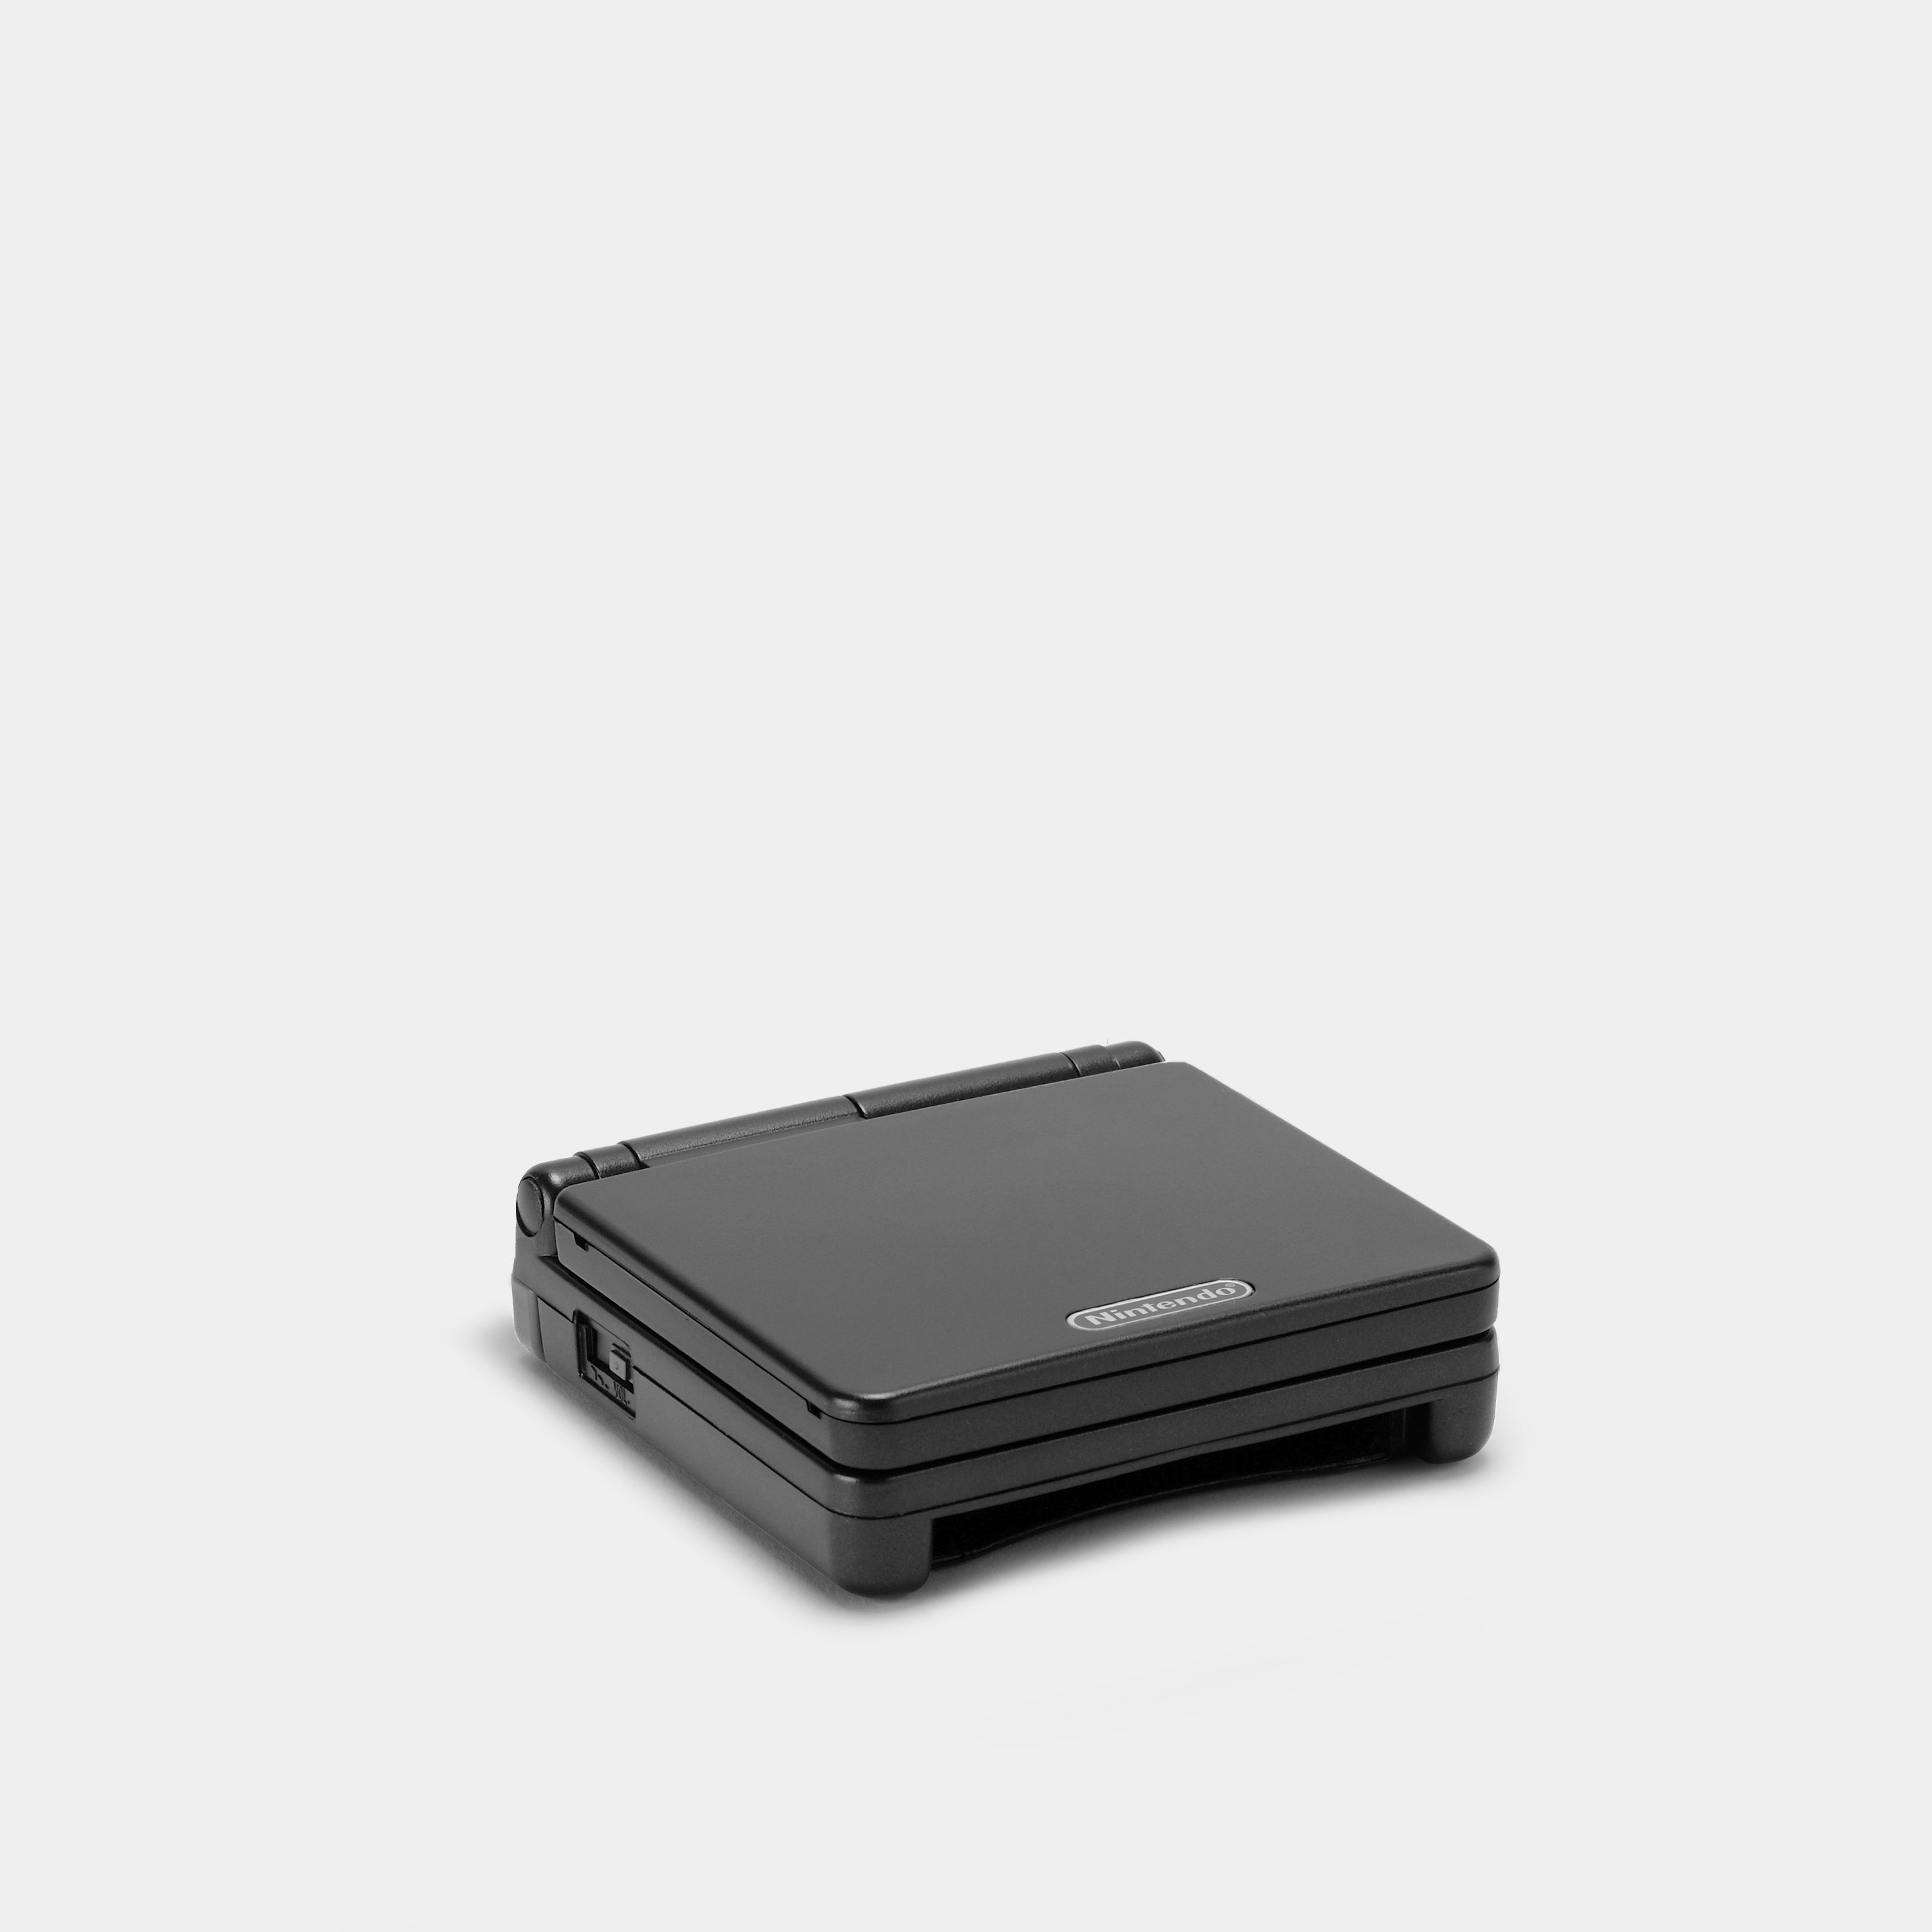 Nintendo Game Boy Advance SP Black Game Console